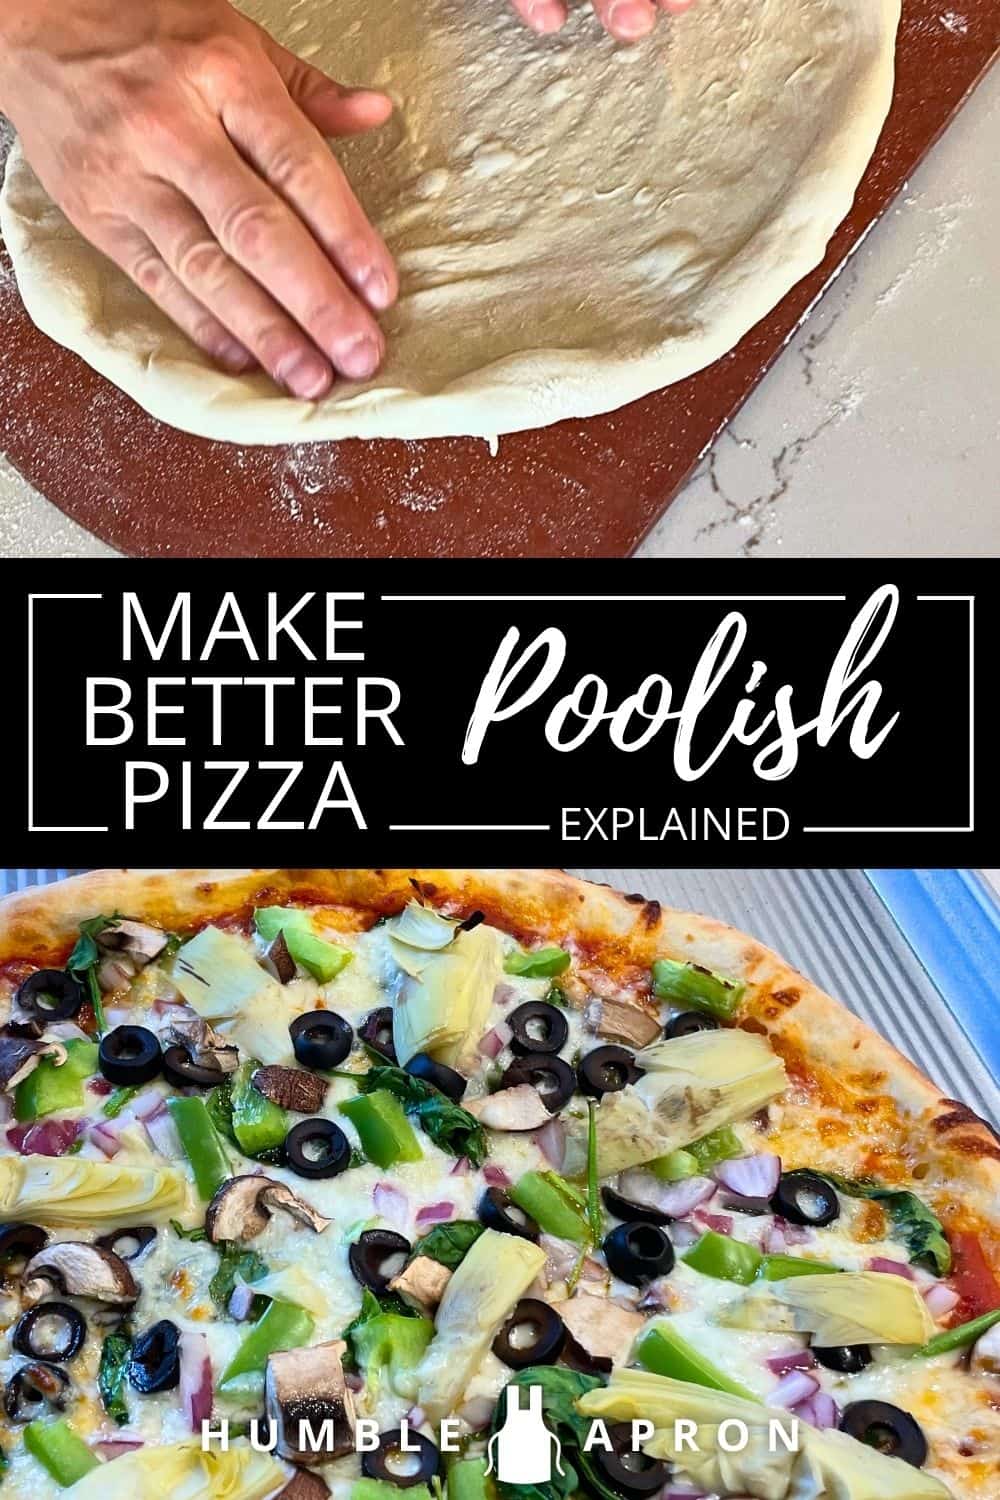 Poolish for Pizza Dough Explained: Make Better Pizza